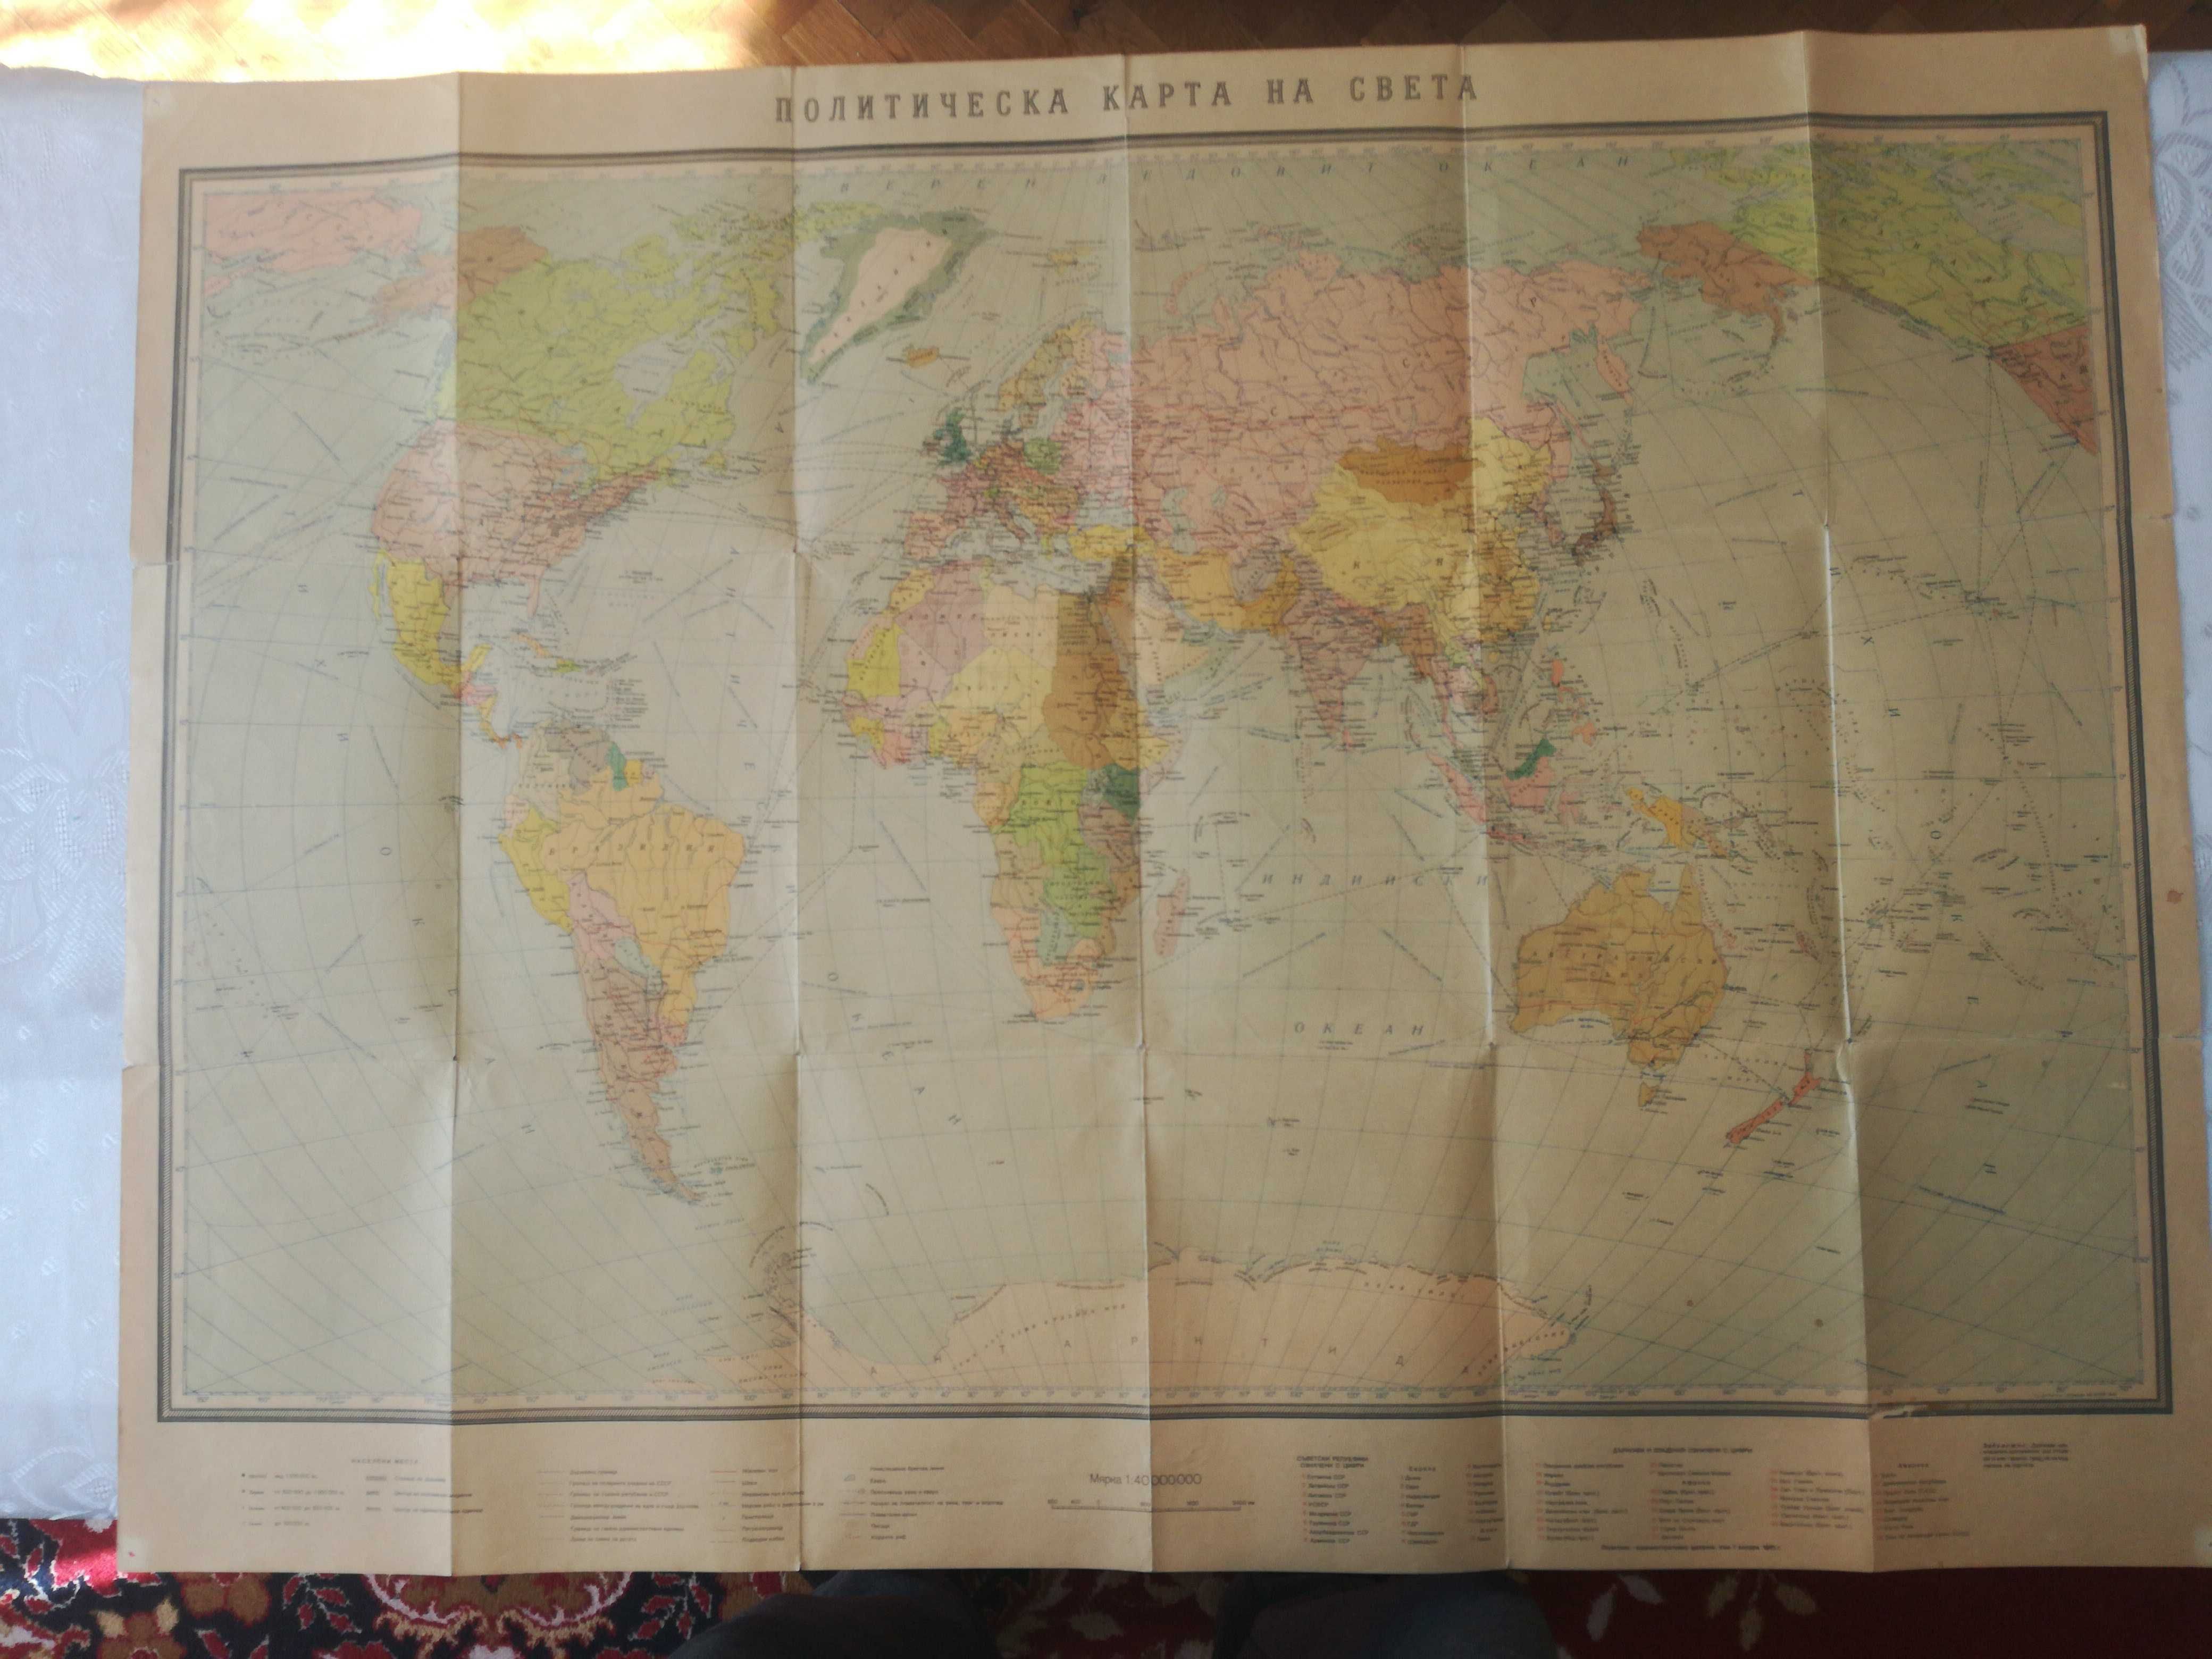 Политическа карта на света 1961 г. Мащаб 1:40 000 000